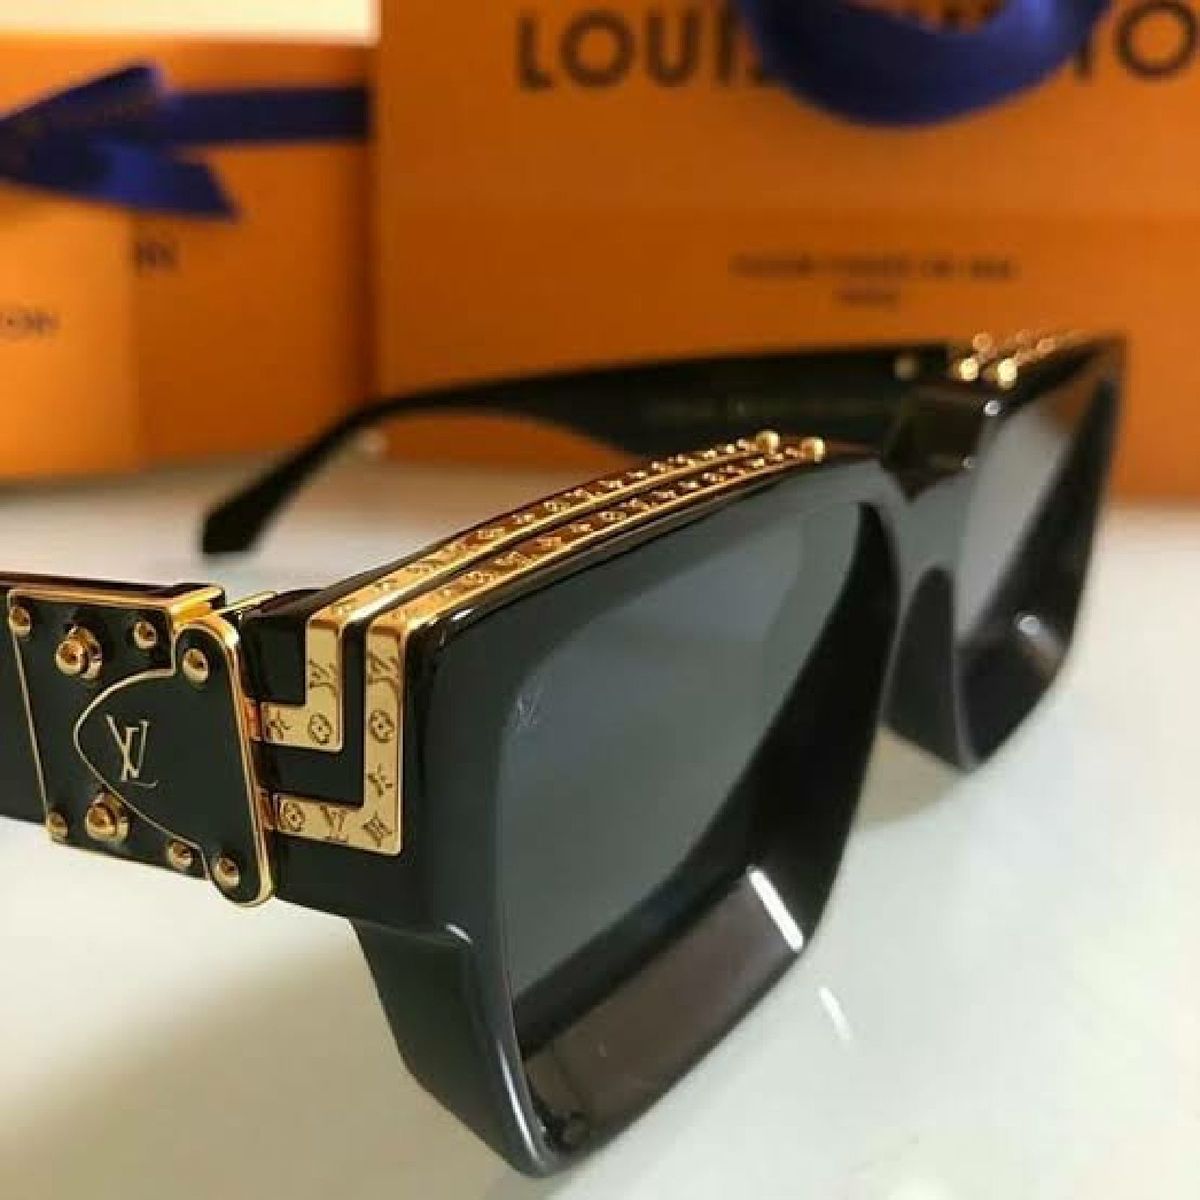 Óculos de sol importado unissex masculino feminino Louis Vuitton  Millionaire - Corre Que Ta Baratinho